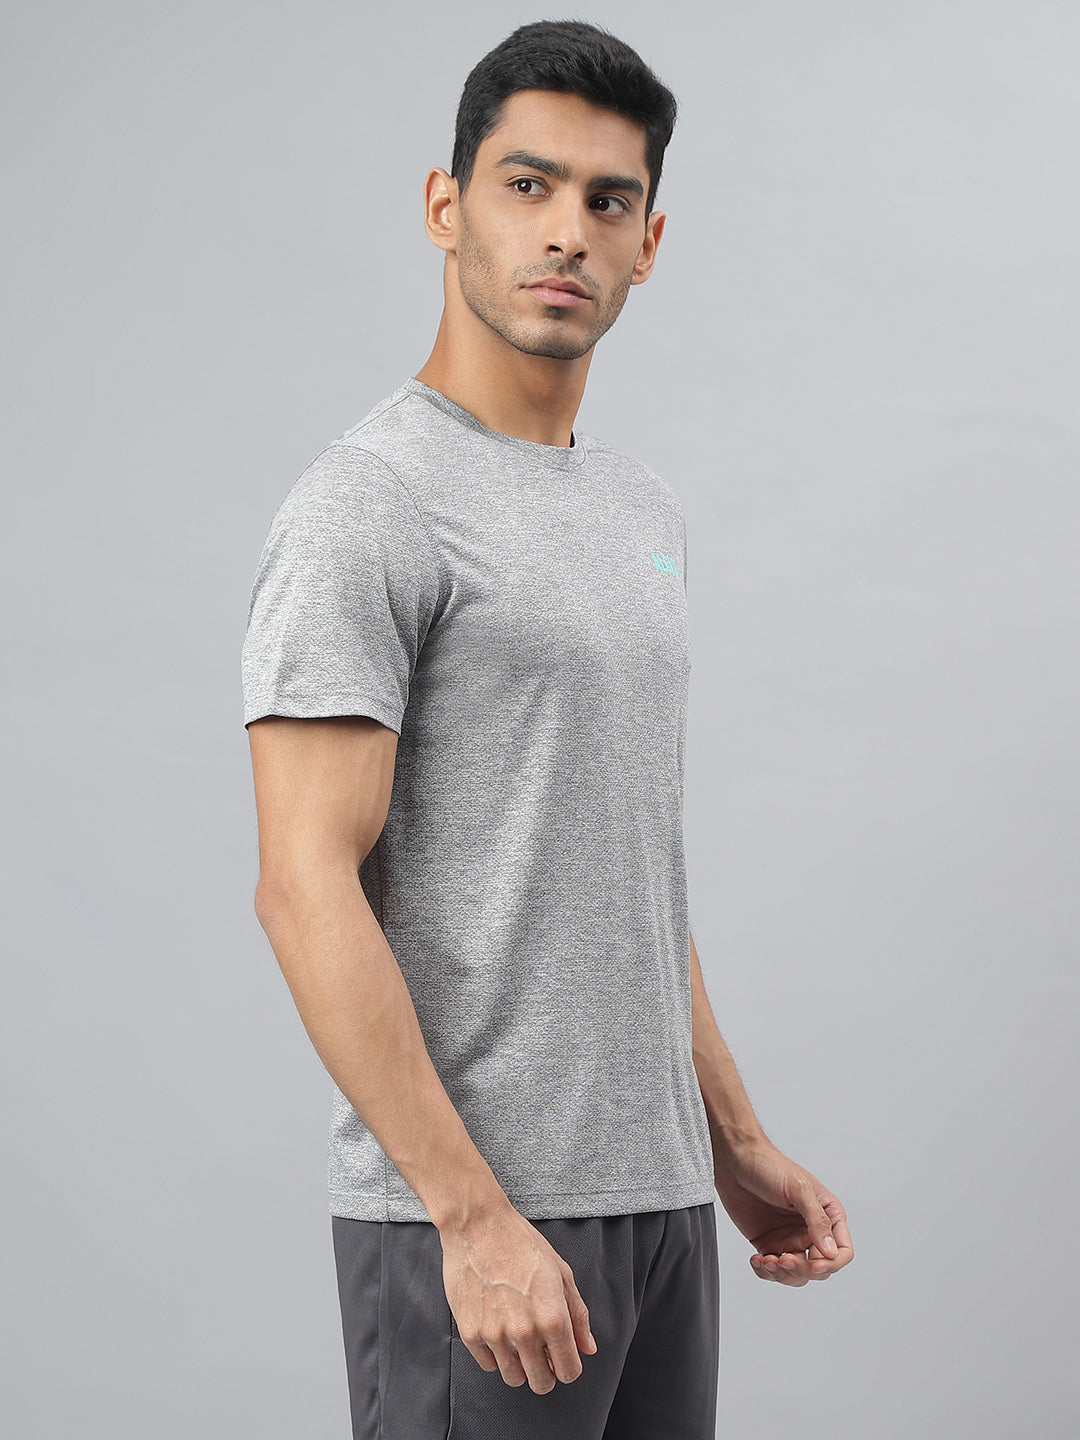 Alcis Men Printed Grey Cationic Anti-Static Slim-Fit Round Neck Training T-Shirt